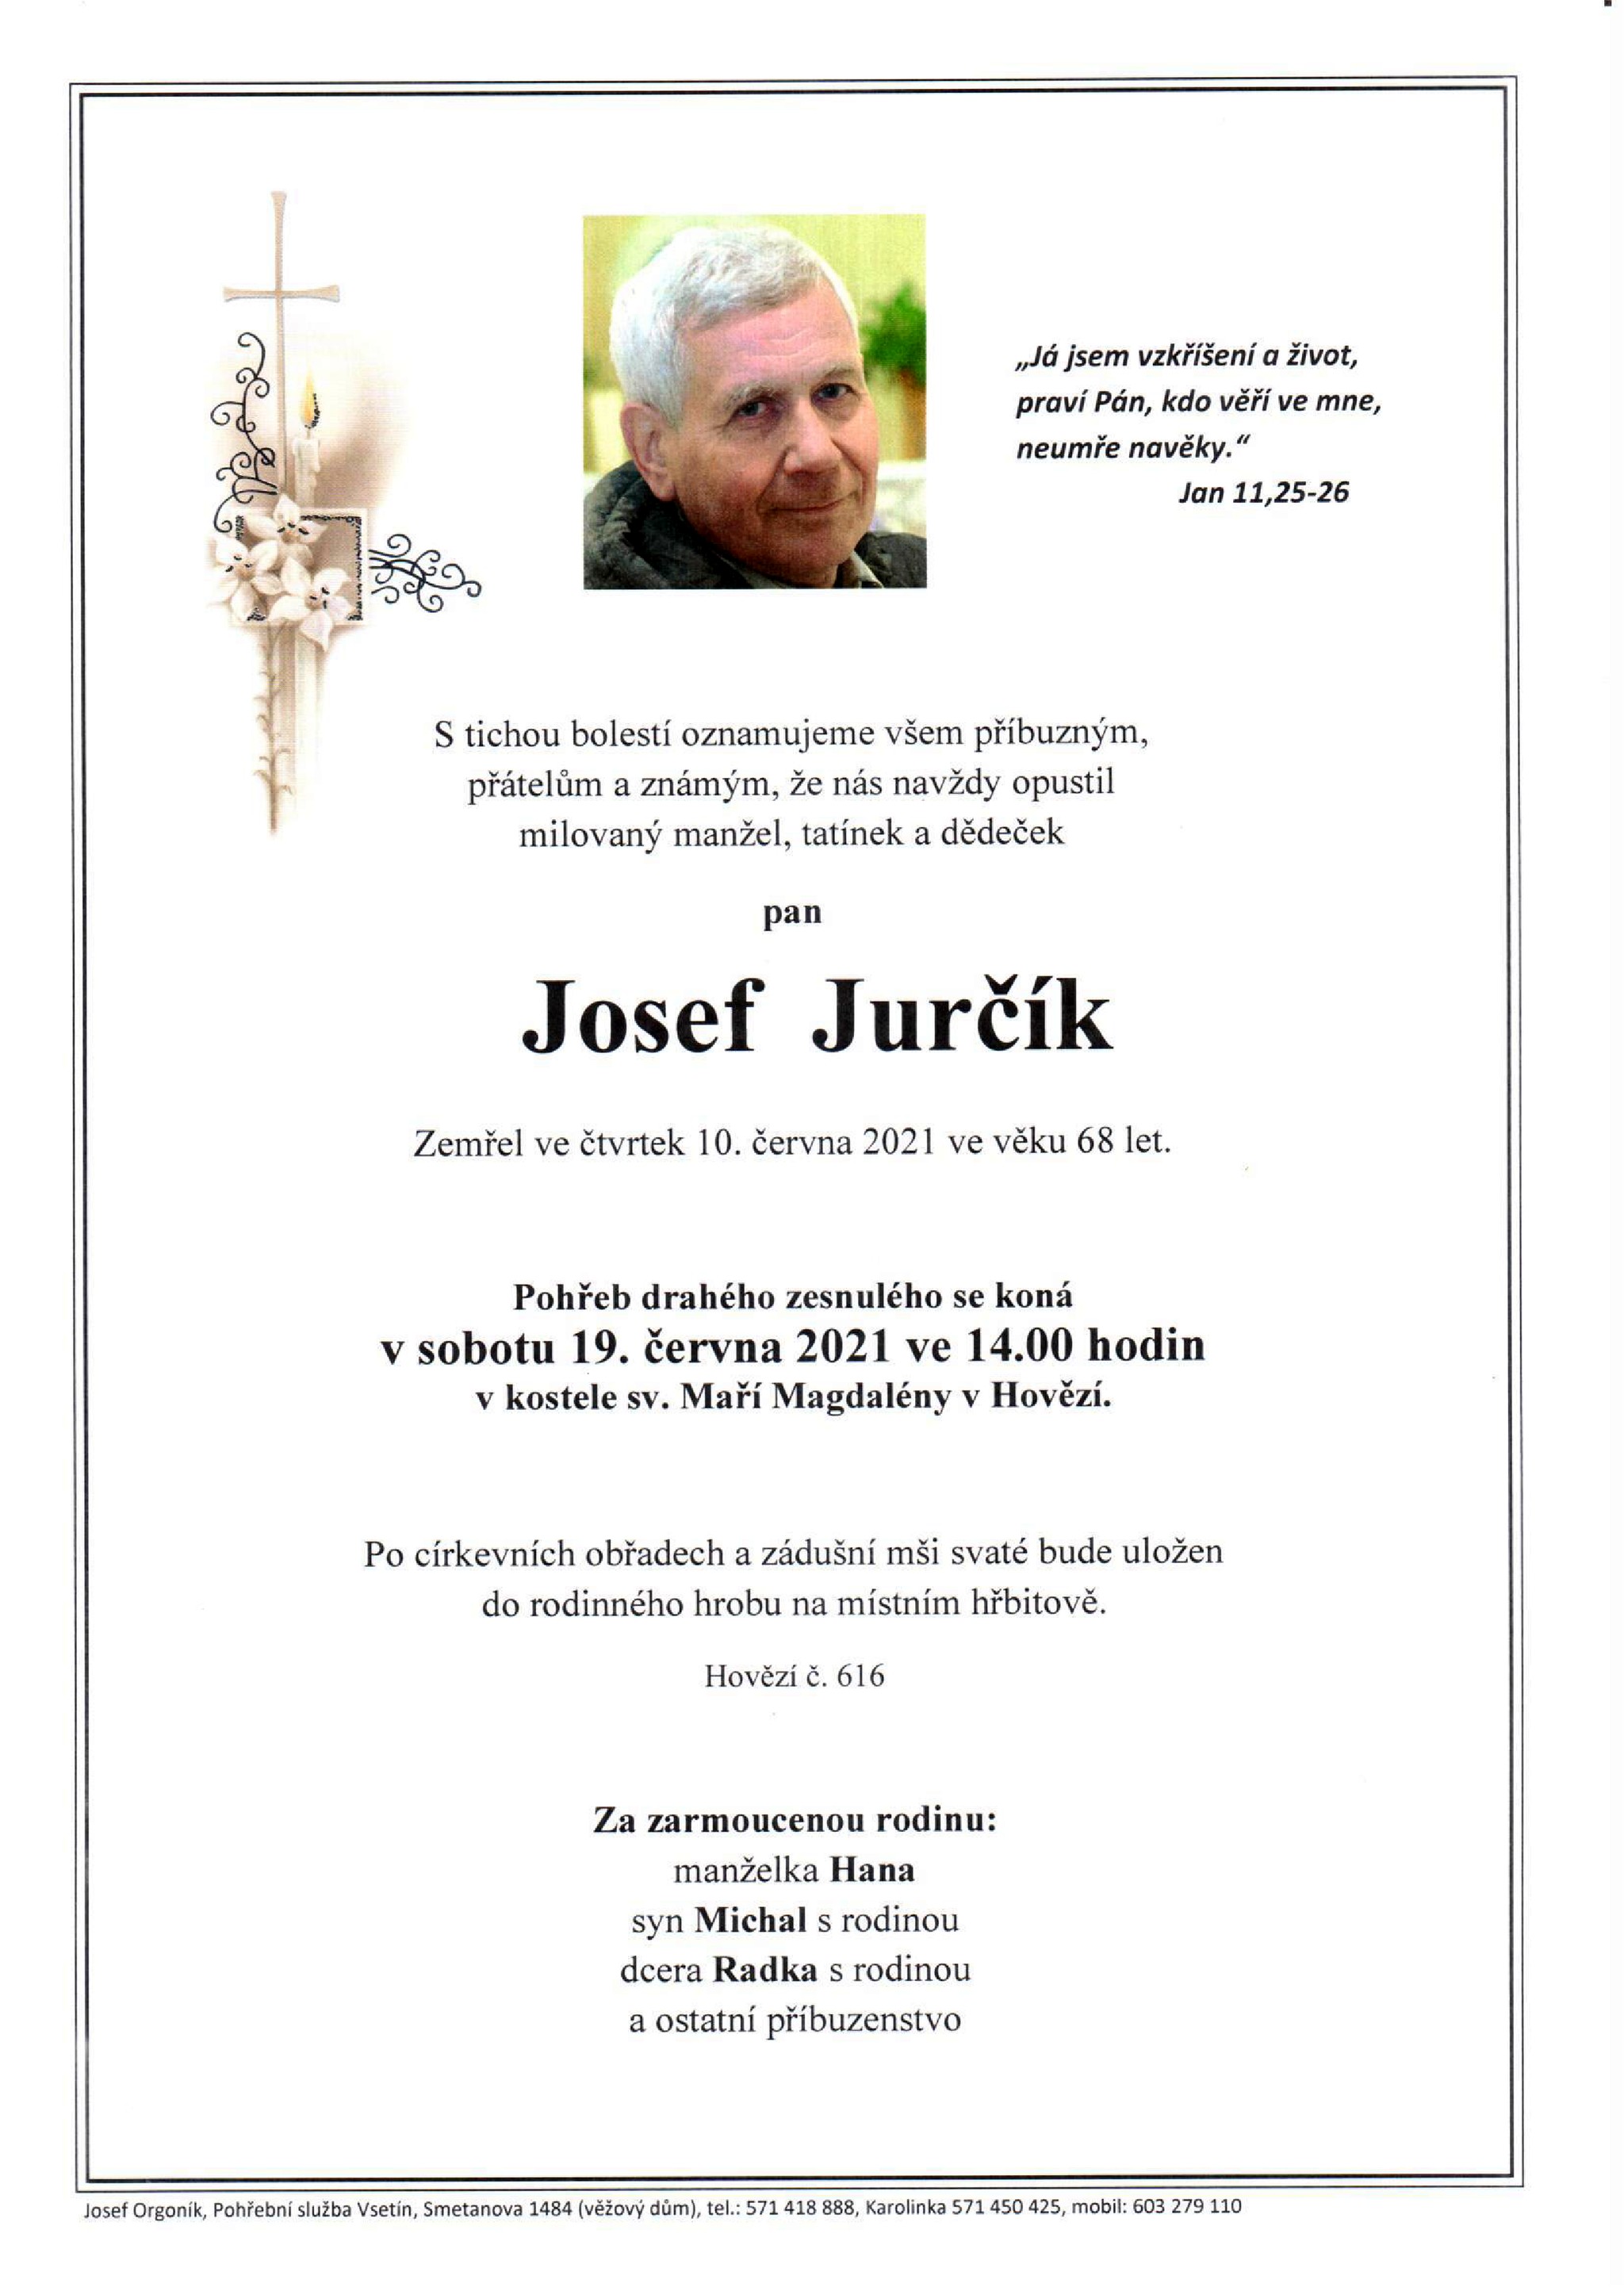 Josef Jurčík